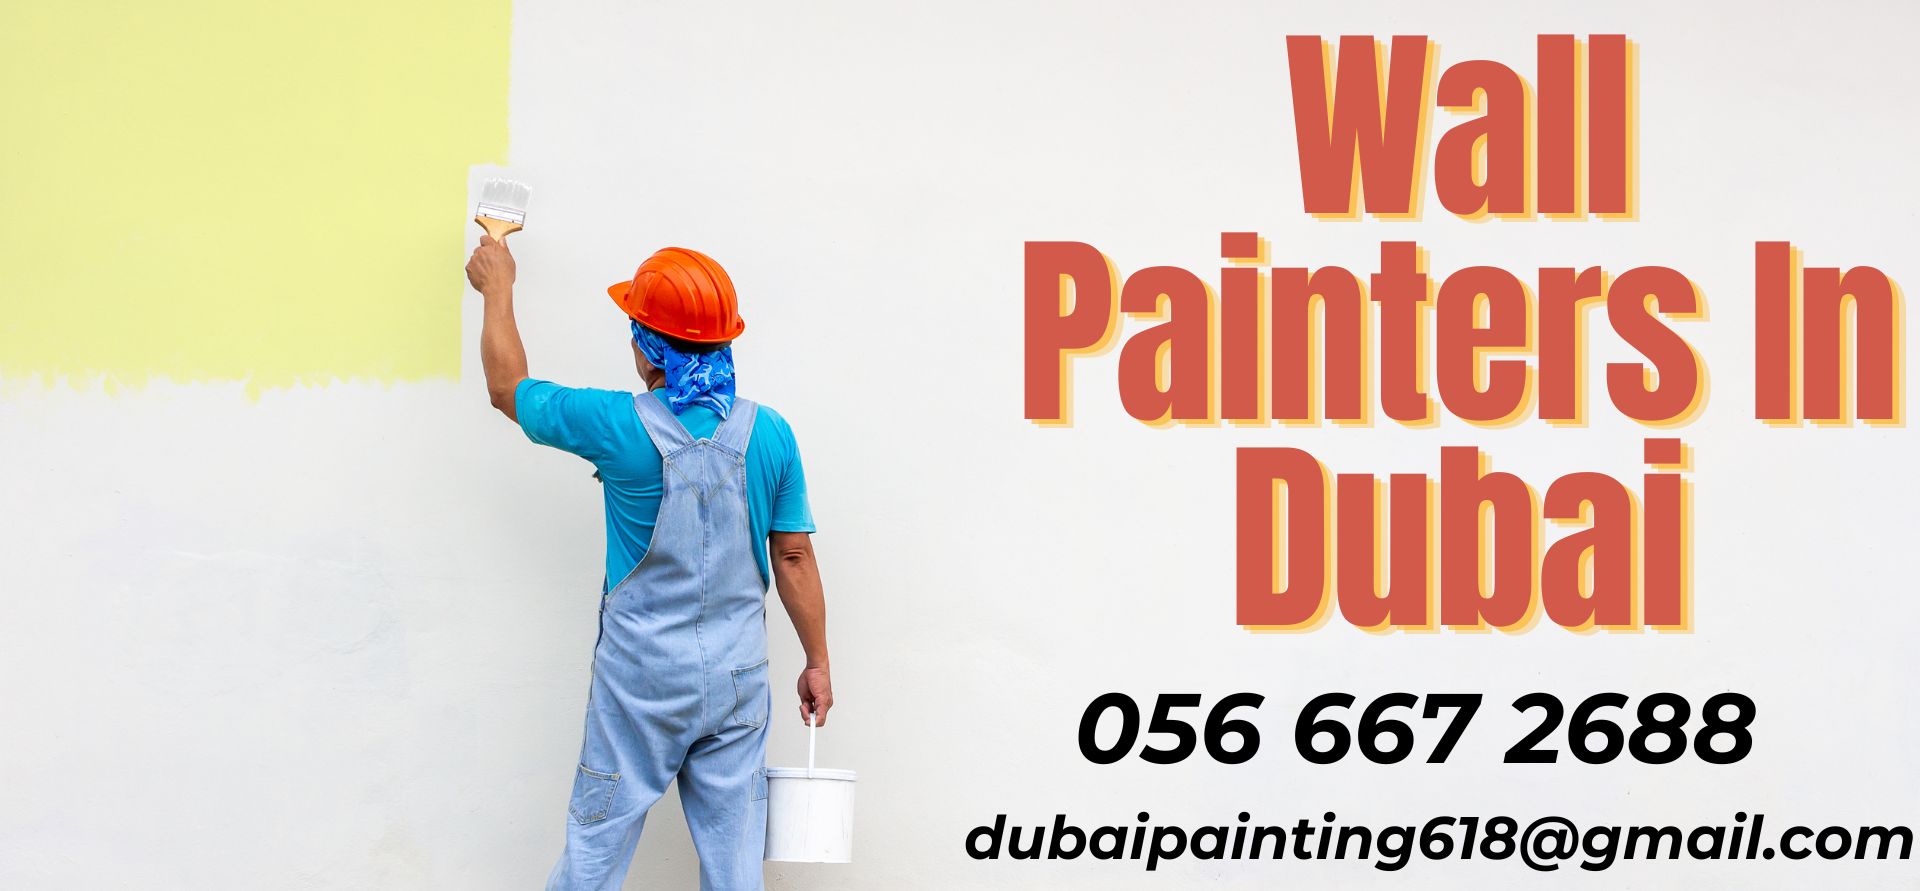 Wall Painters In Dubai